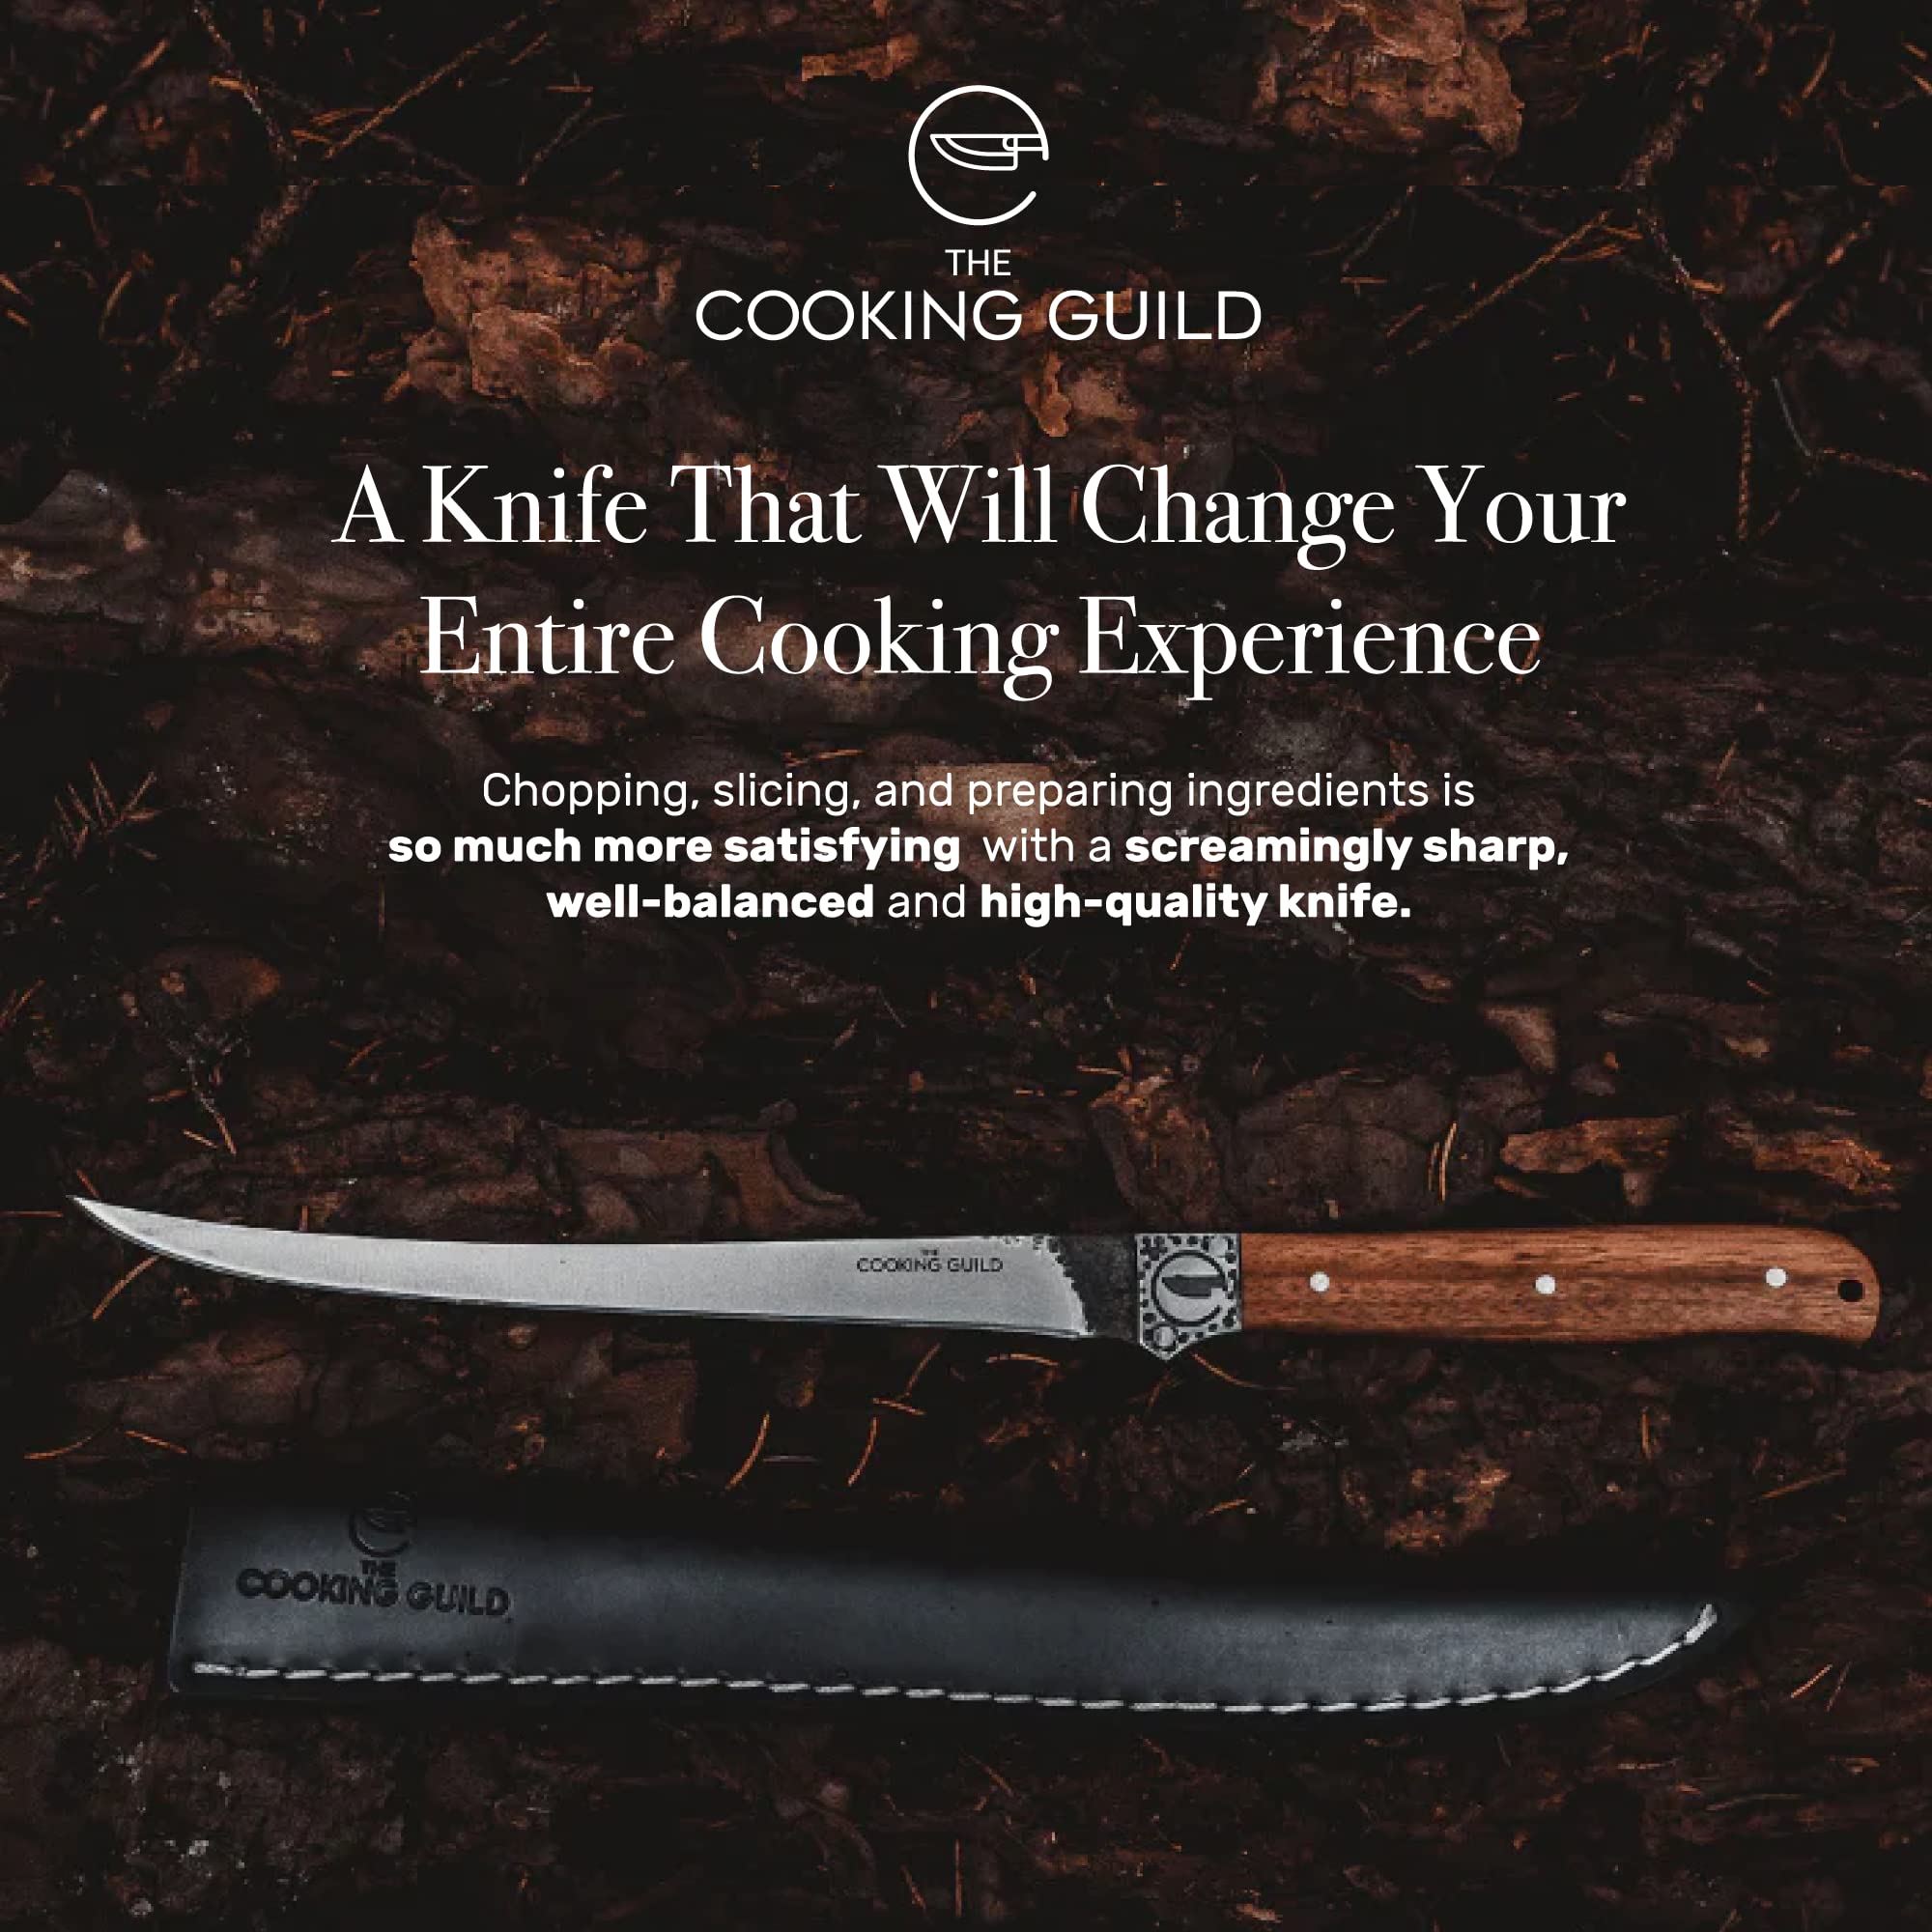 The Cooking Guild Professional Fillet Knife Fishing - 7" High Carbon Stainless Steel Boning Knife for Meat & Fish - Deboning Knife Filet Set incl. Leather Sheath for Butchering